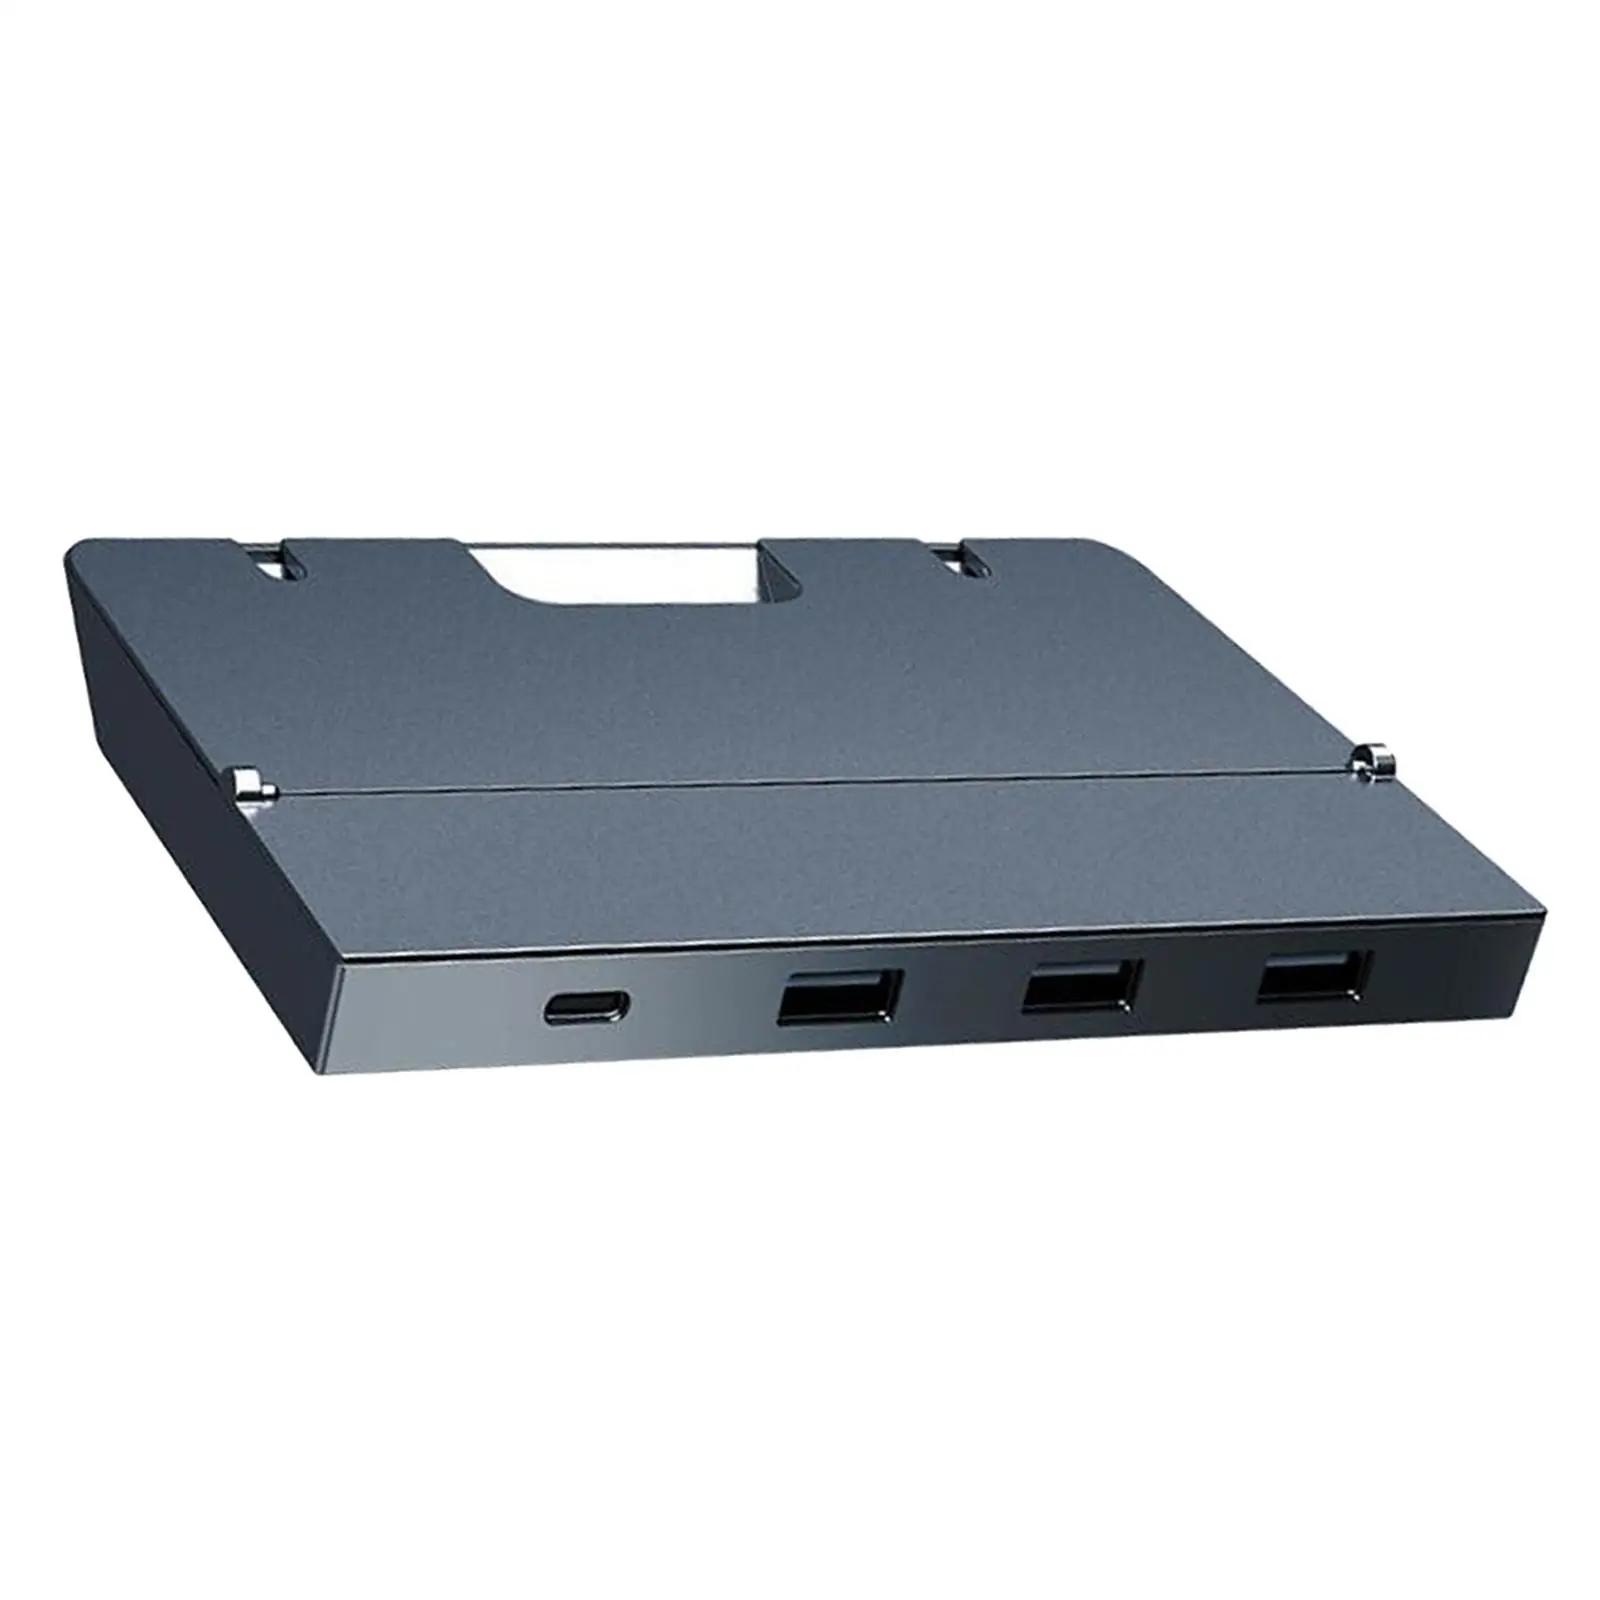 Automotive USB  Hub Center Console Docking Station Fit  2021 Premium Accessories Professional Durable